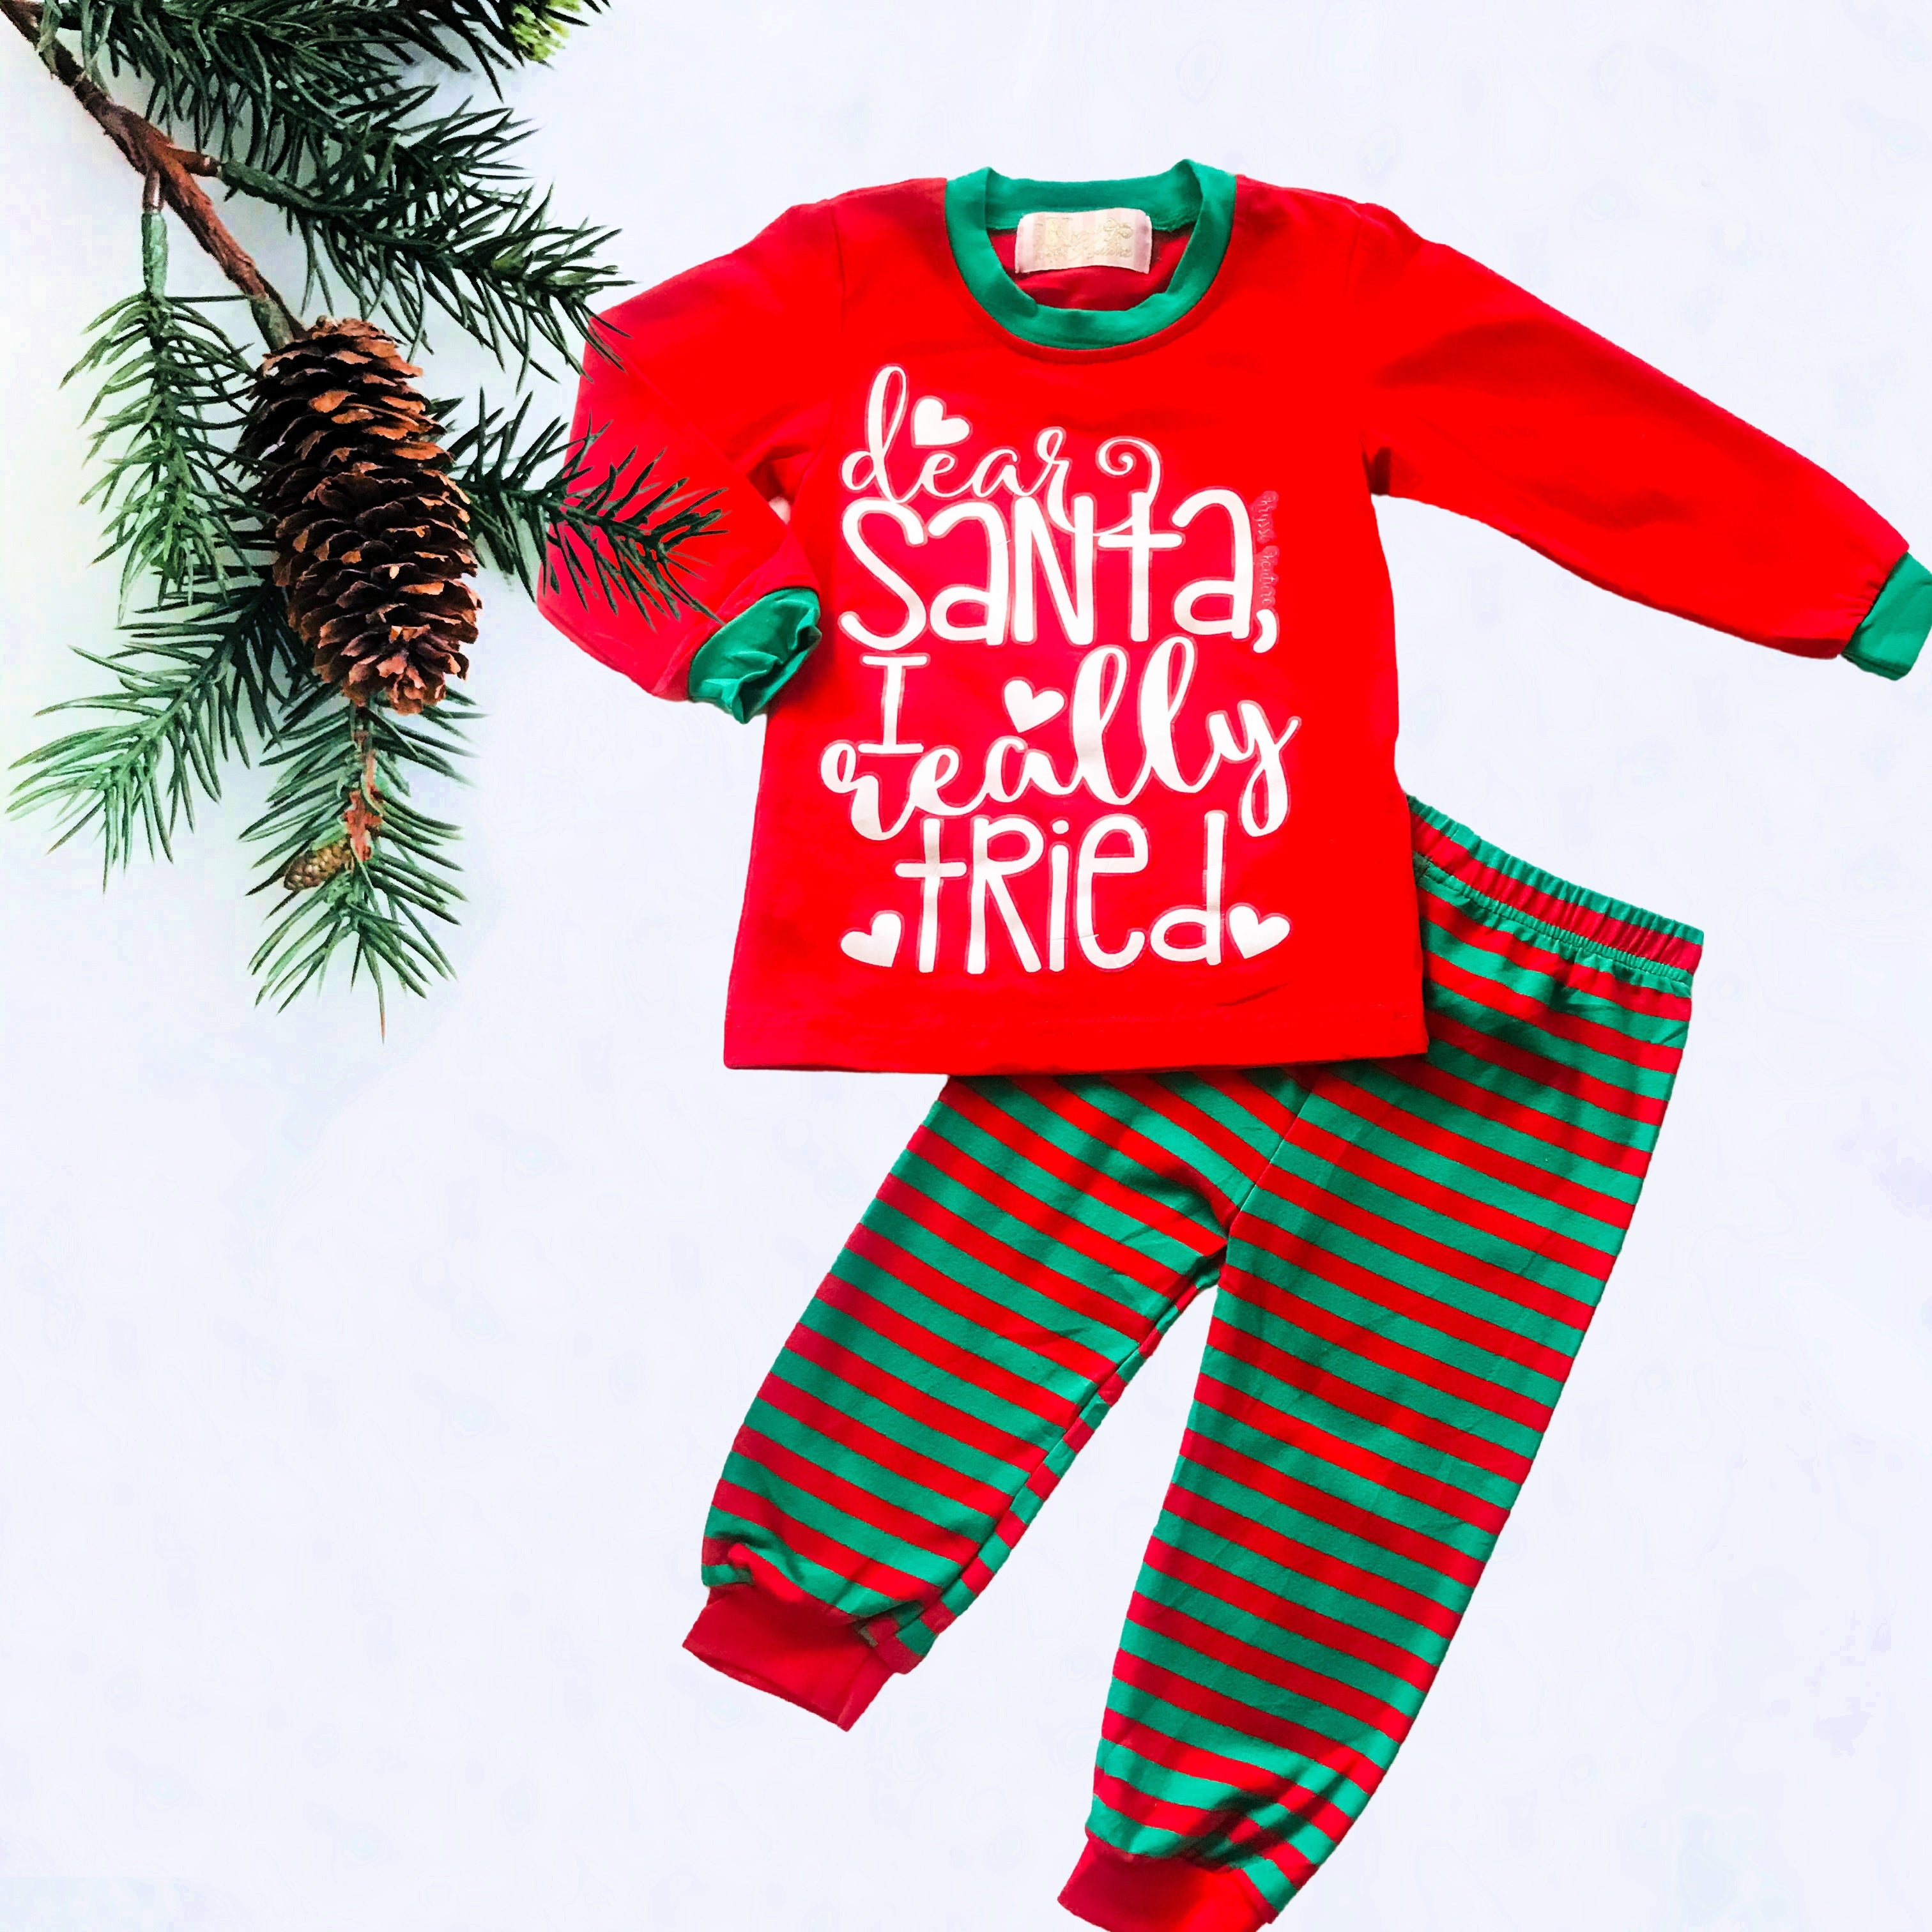 Dear Santa I Tried Kids Christmas Pajamas